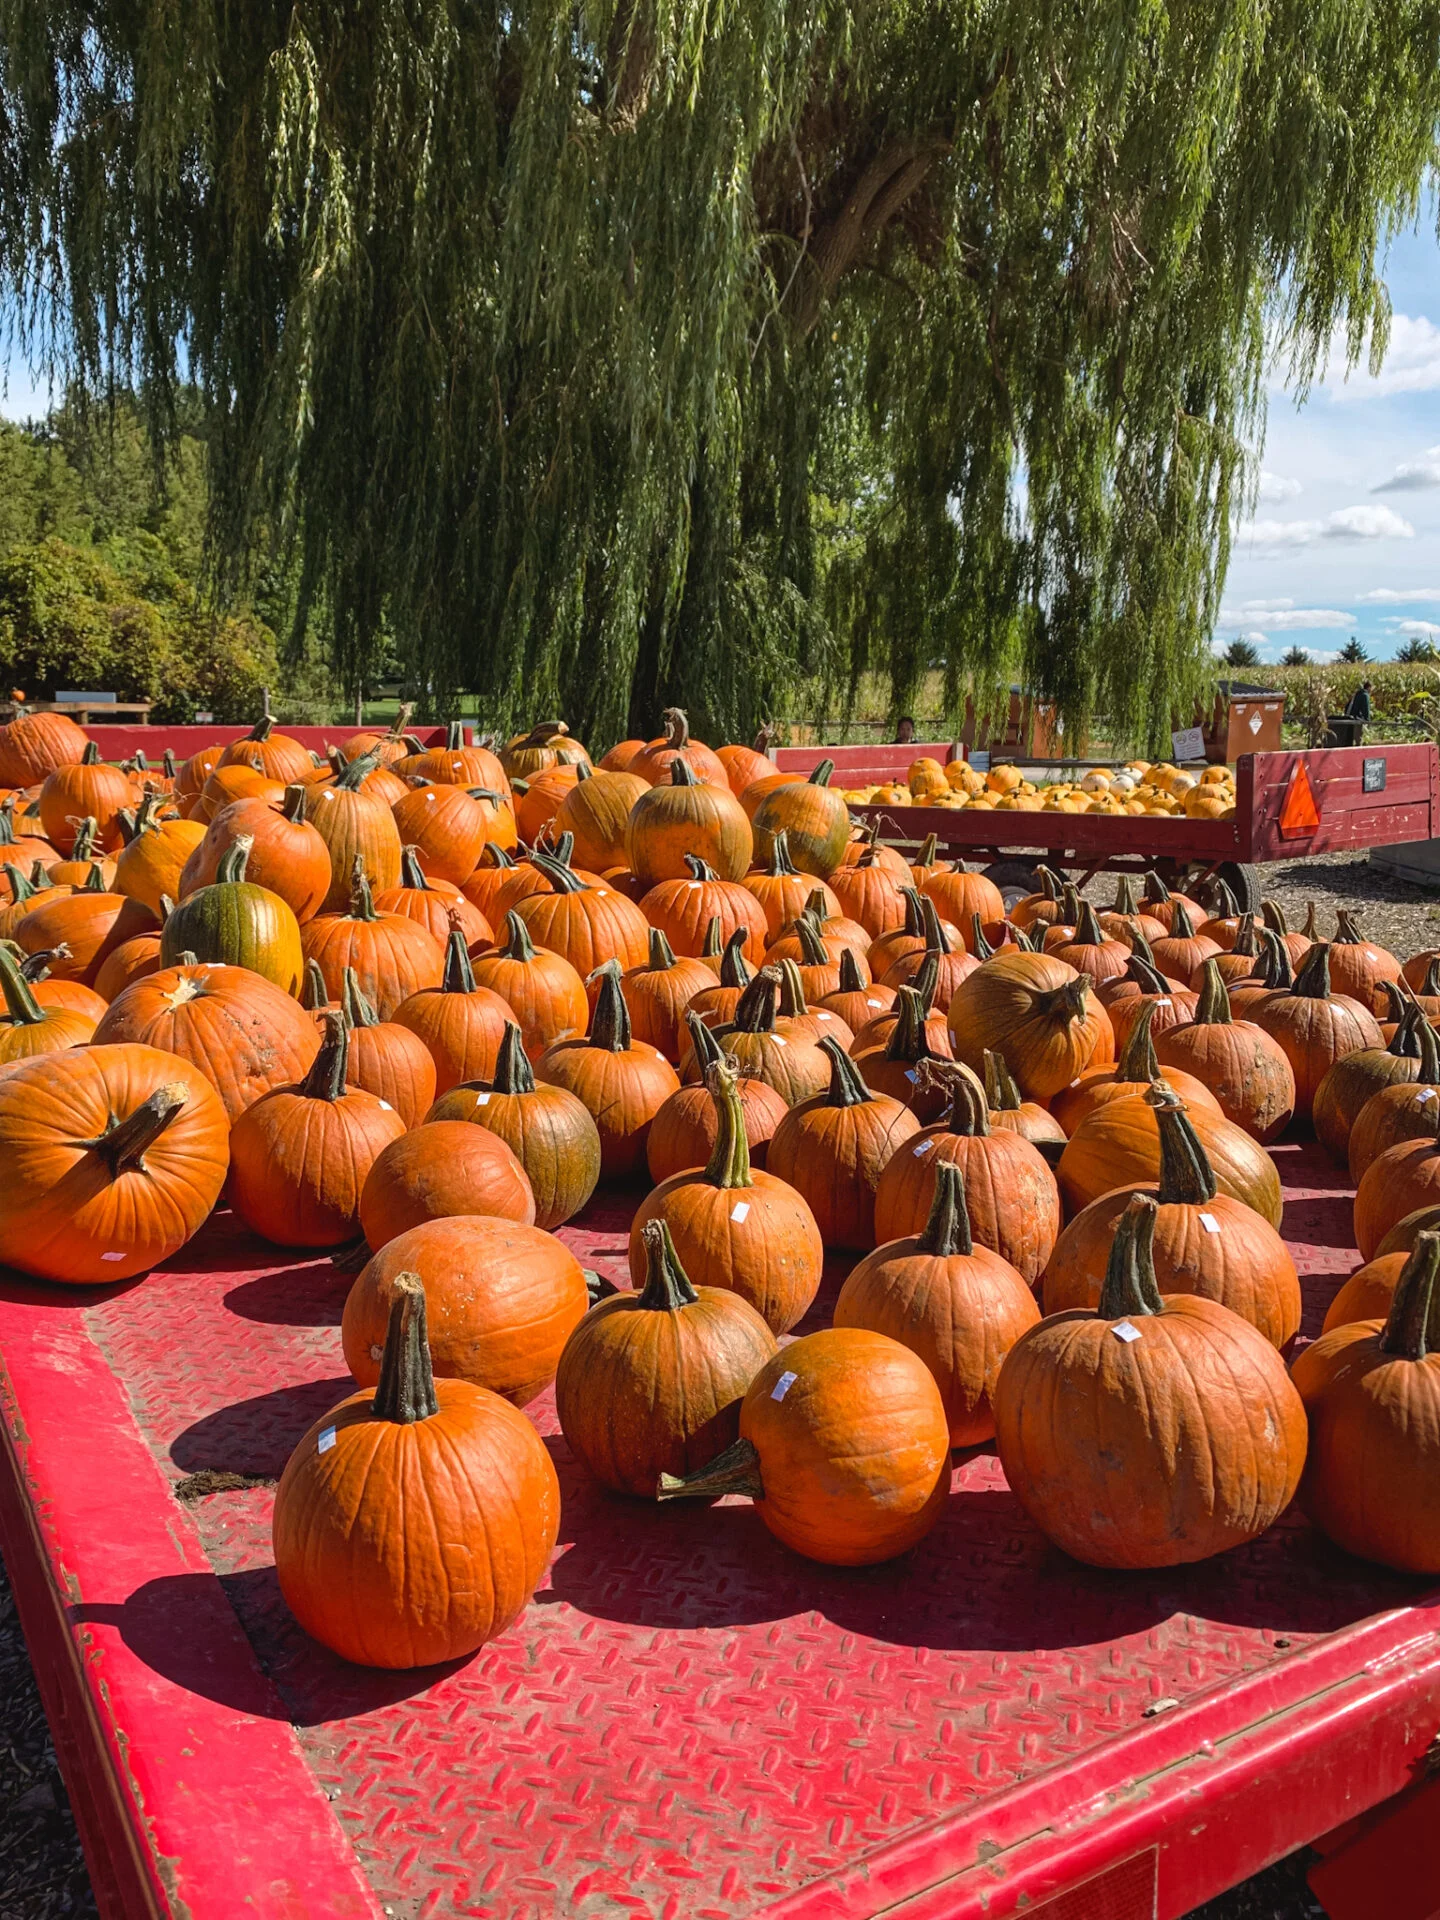 Pumpkins from Reesor's Farm Market in Markham, Ontario